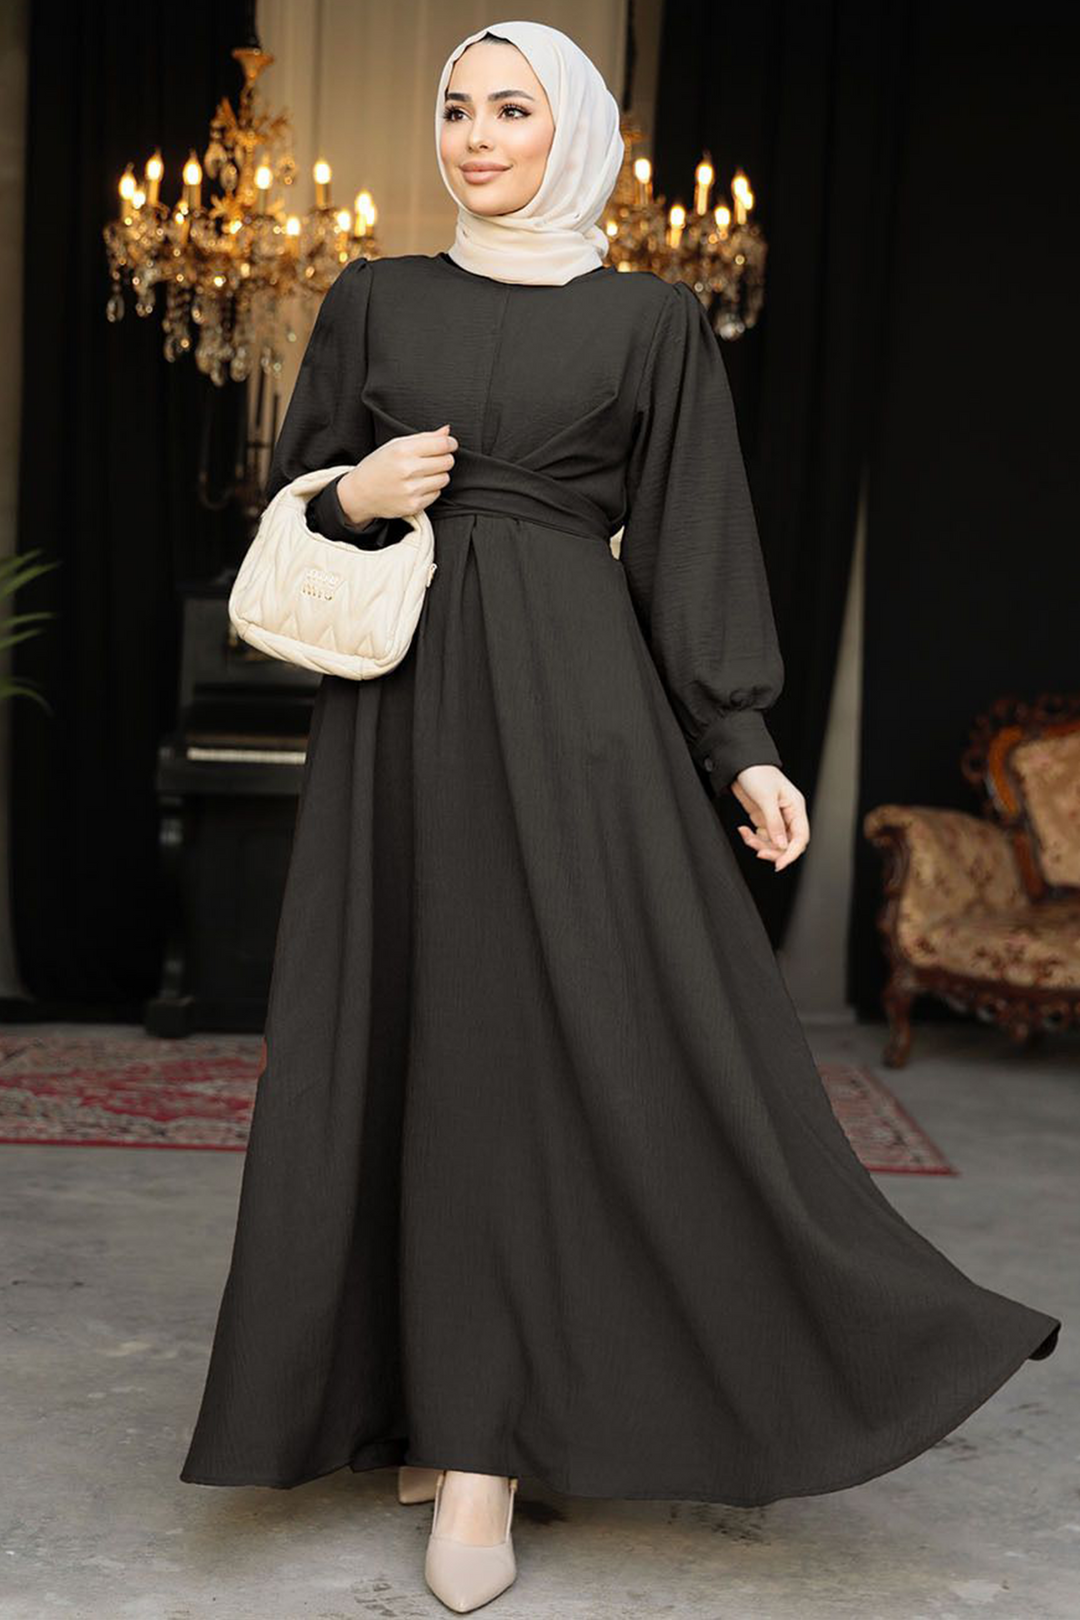 a woman wearing a black dress and a white purse